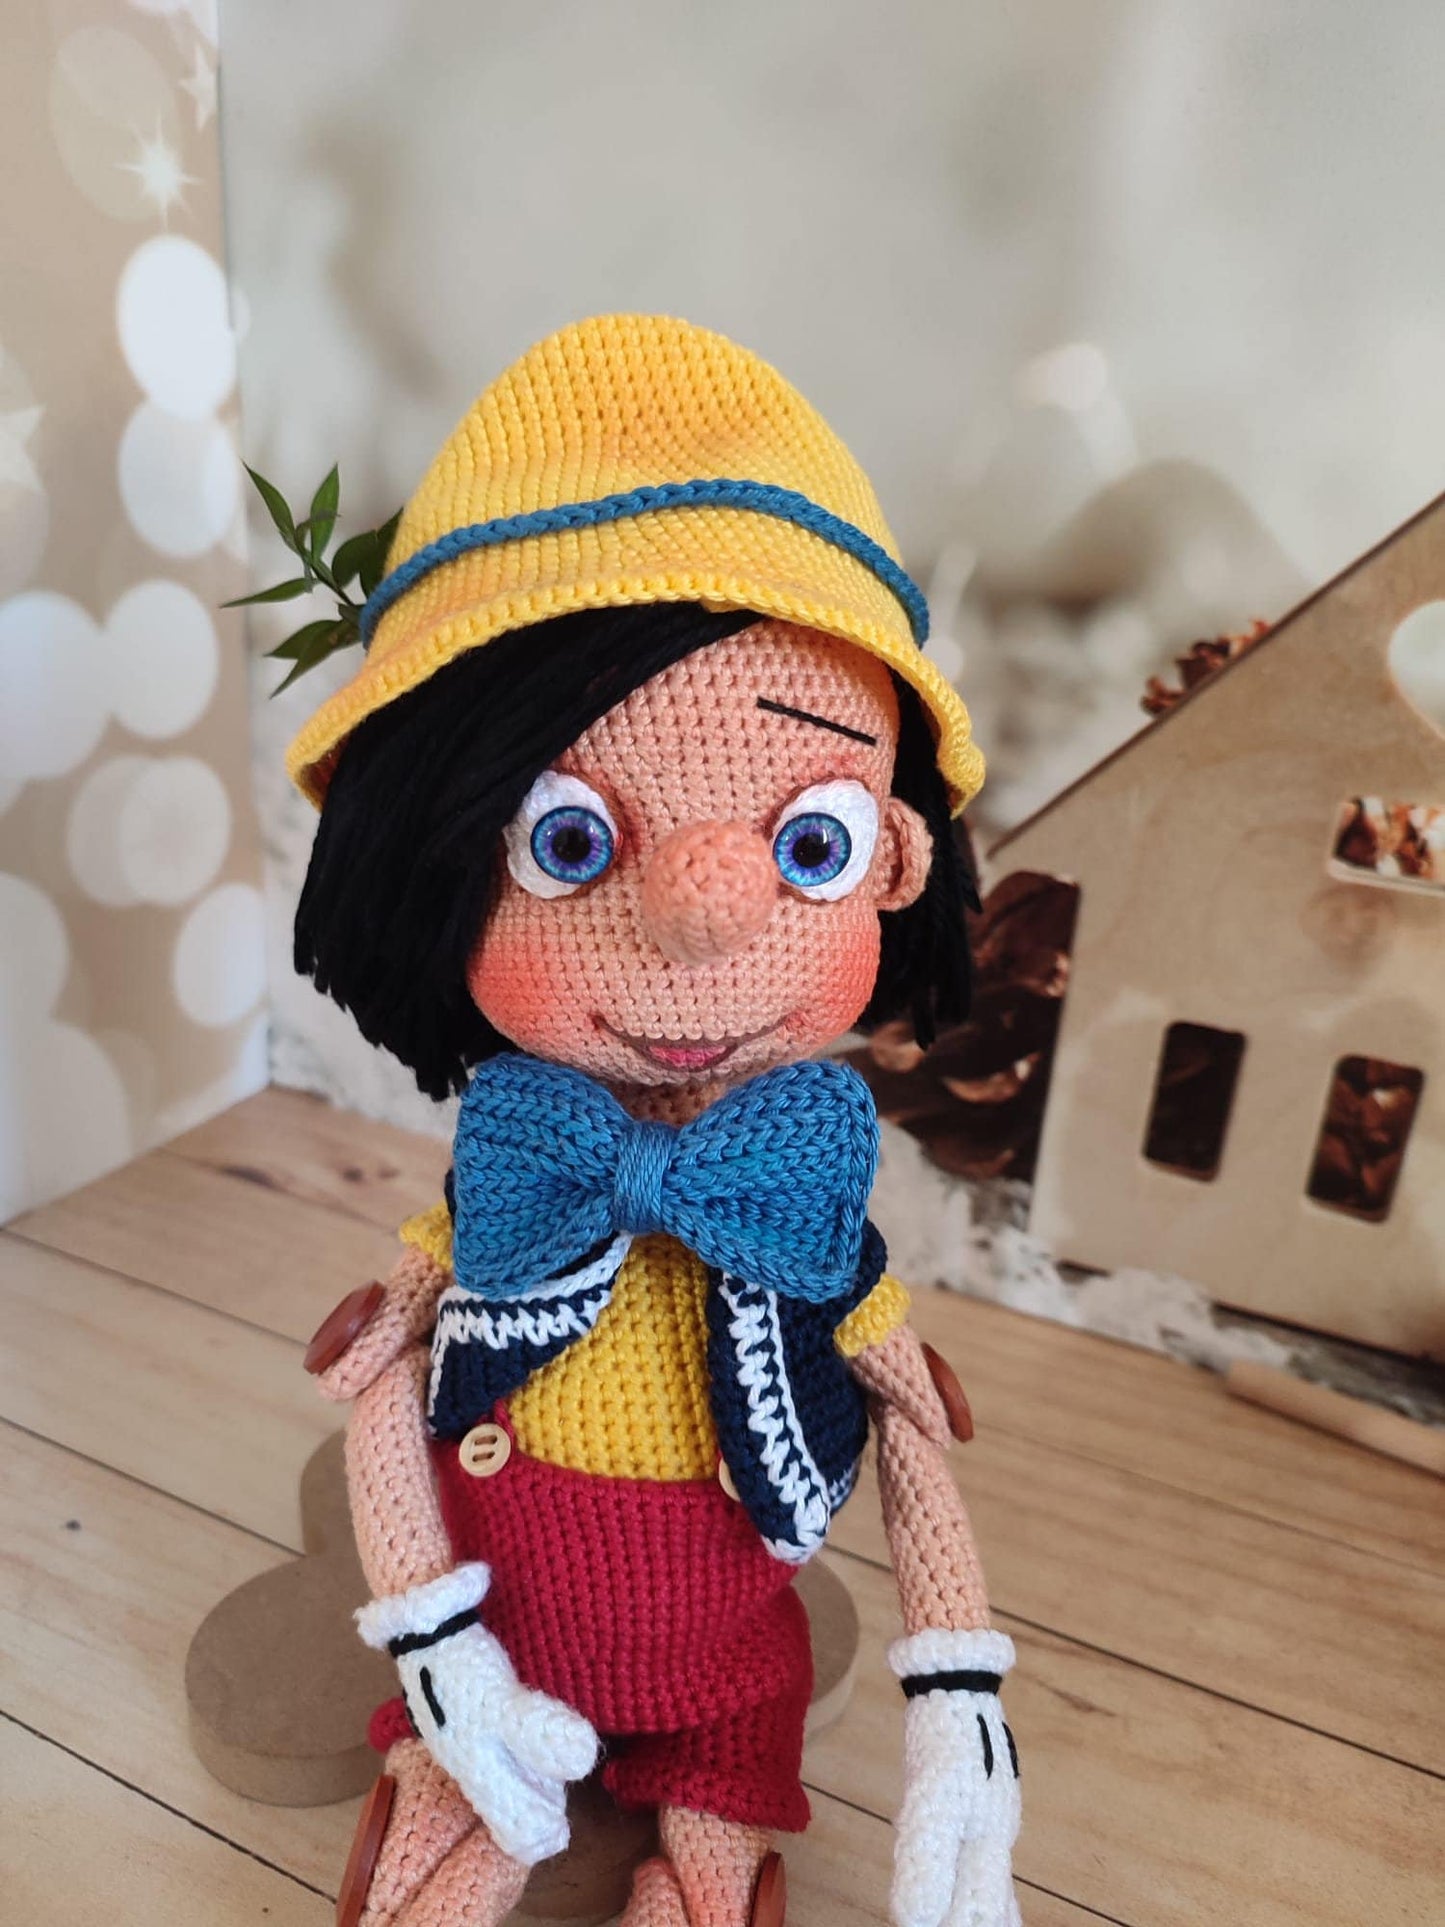 Crochet Baby, Boy Doll, Amigurumi Doll, Knitted Doll, Best Christmas Gift, Granddaughter Gift, Handmade Doll, Yarn Dolls, Christmas Doll